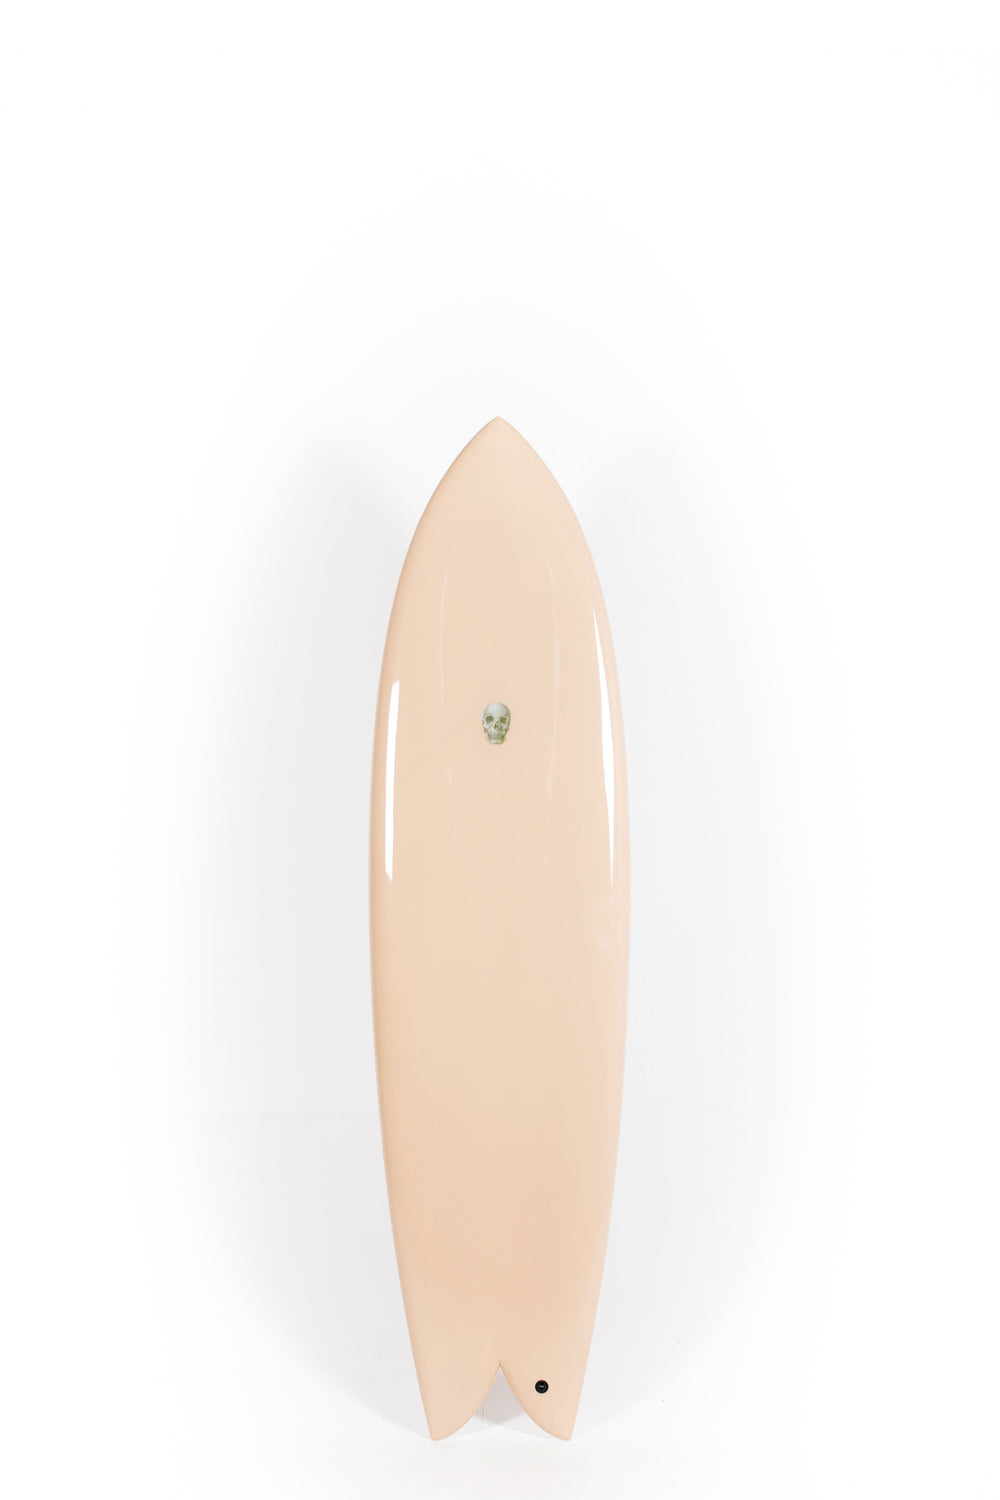 Pukas Surf Shop - Christenson Surfboards - LONG PHISH - 6'8